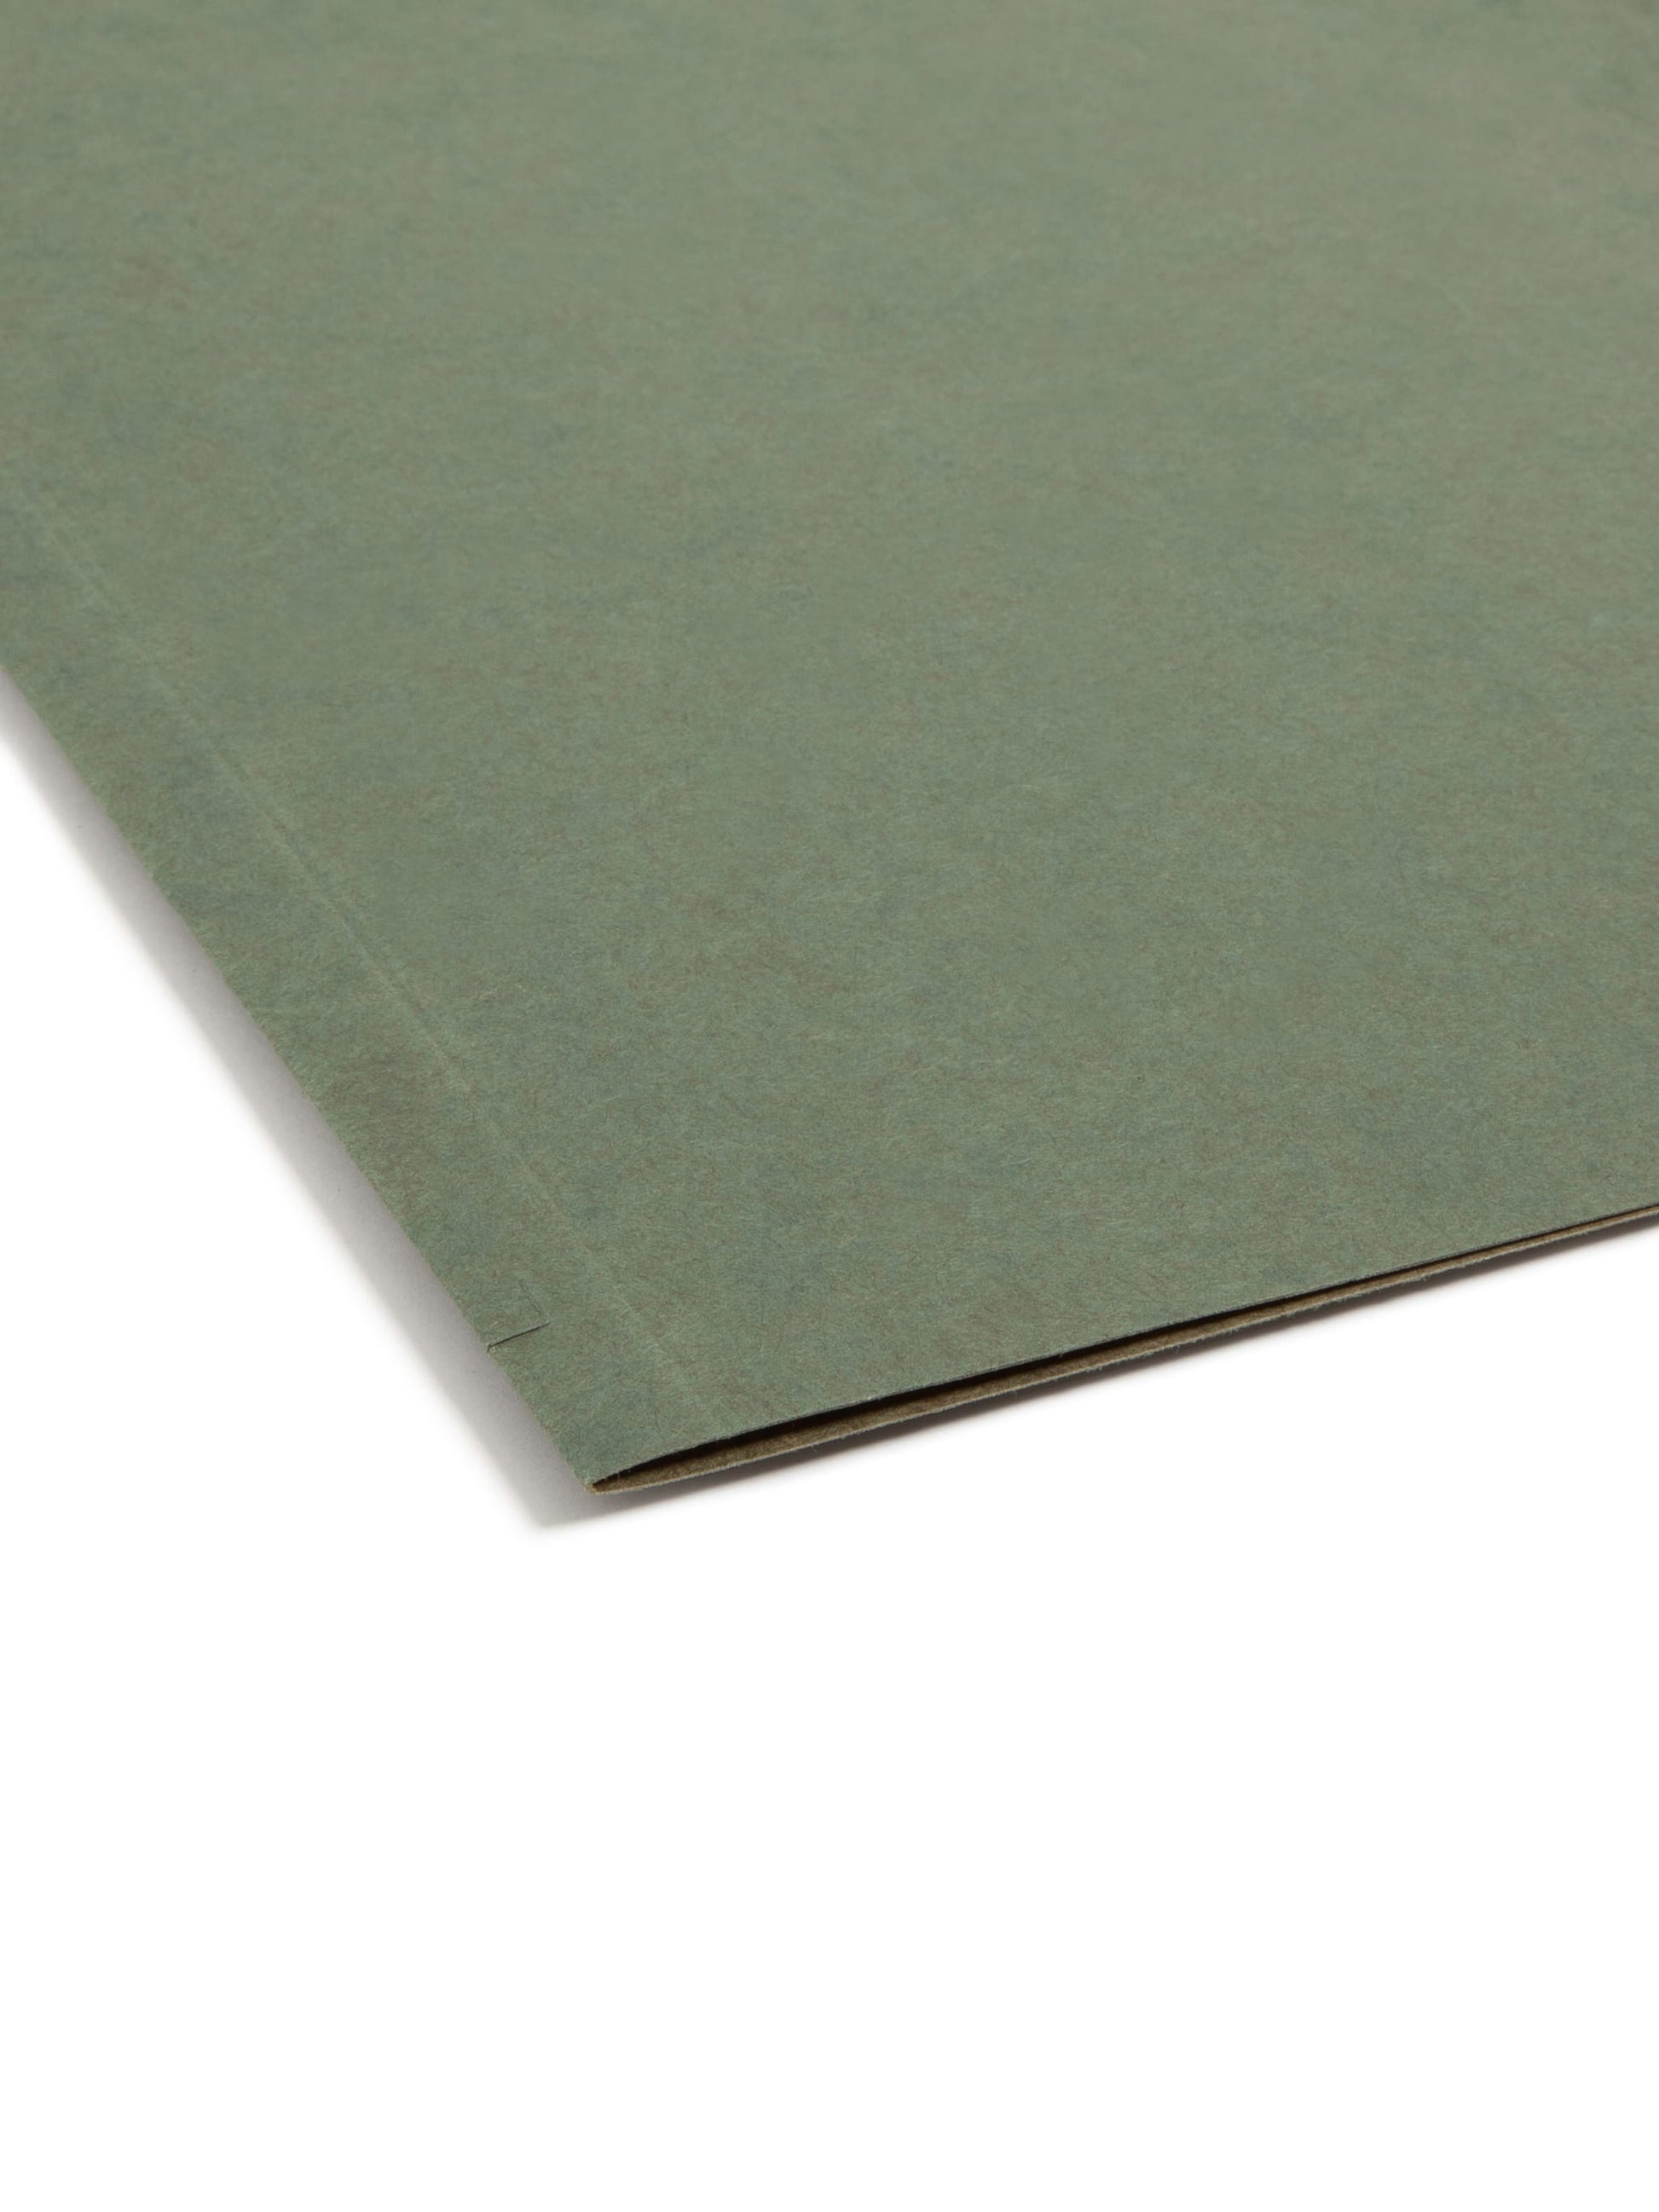 Hanging Box Bottom File Folders, 1 inch Expansion, Standard Green Color, Legal Size, Set of 25, 086486643399